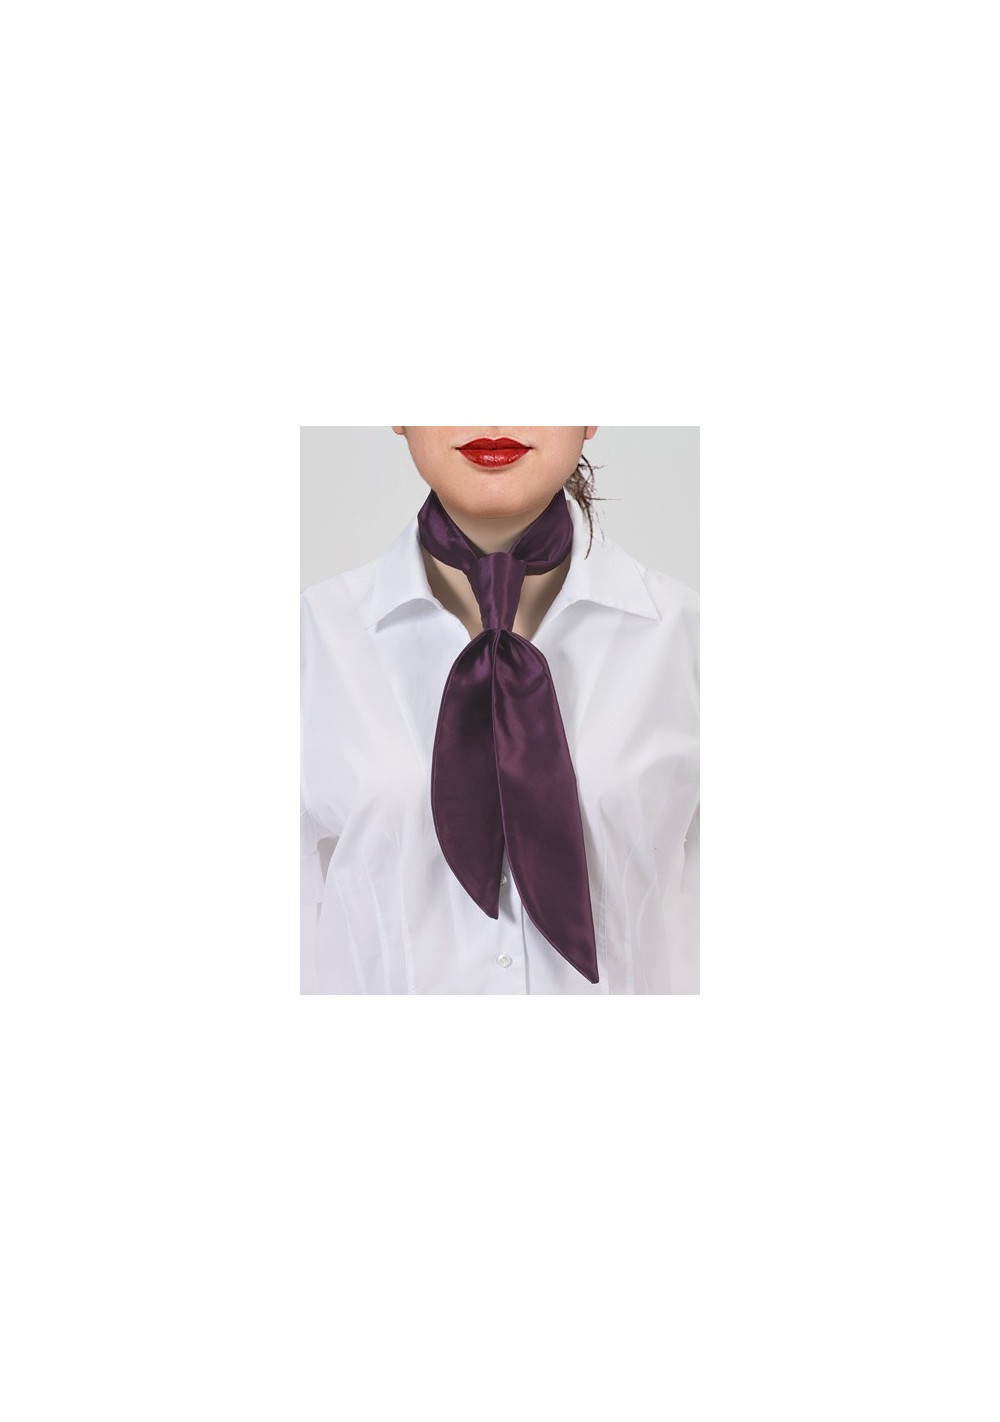 Grape Colored Womens Necktie